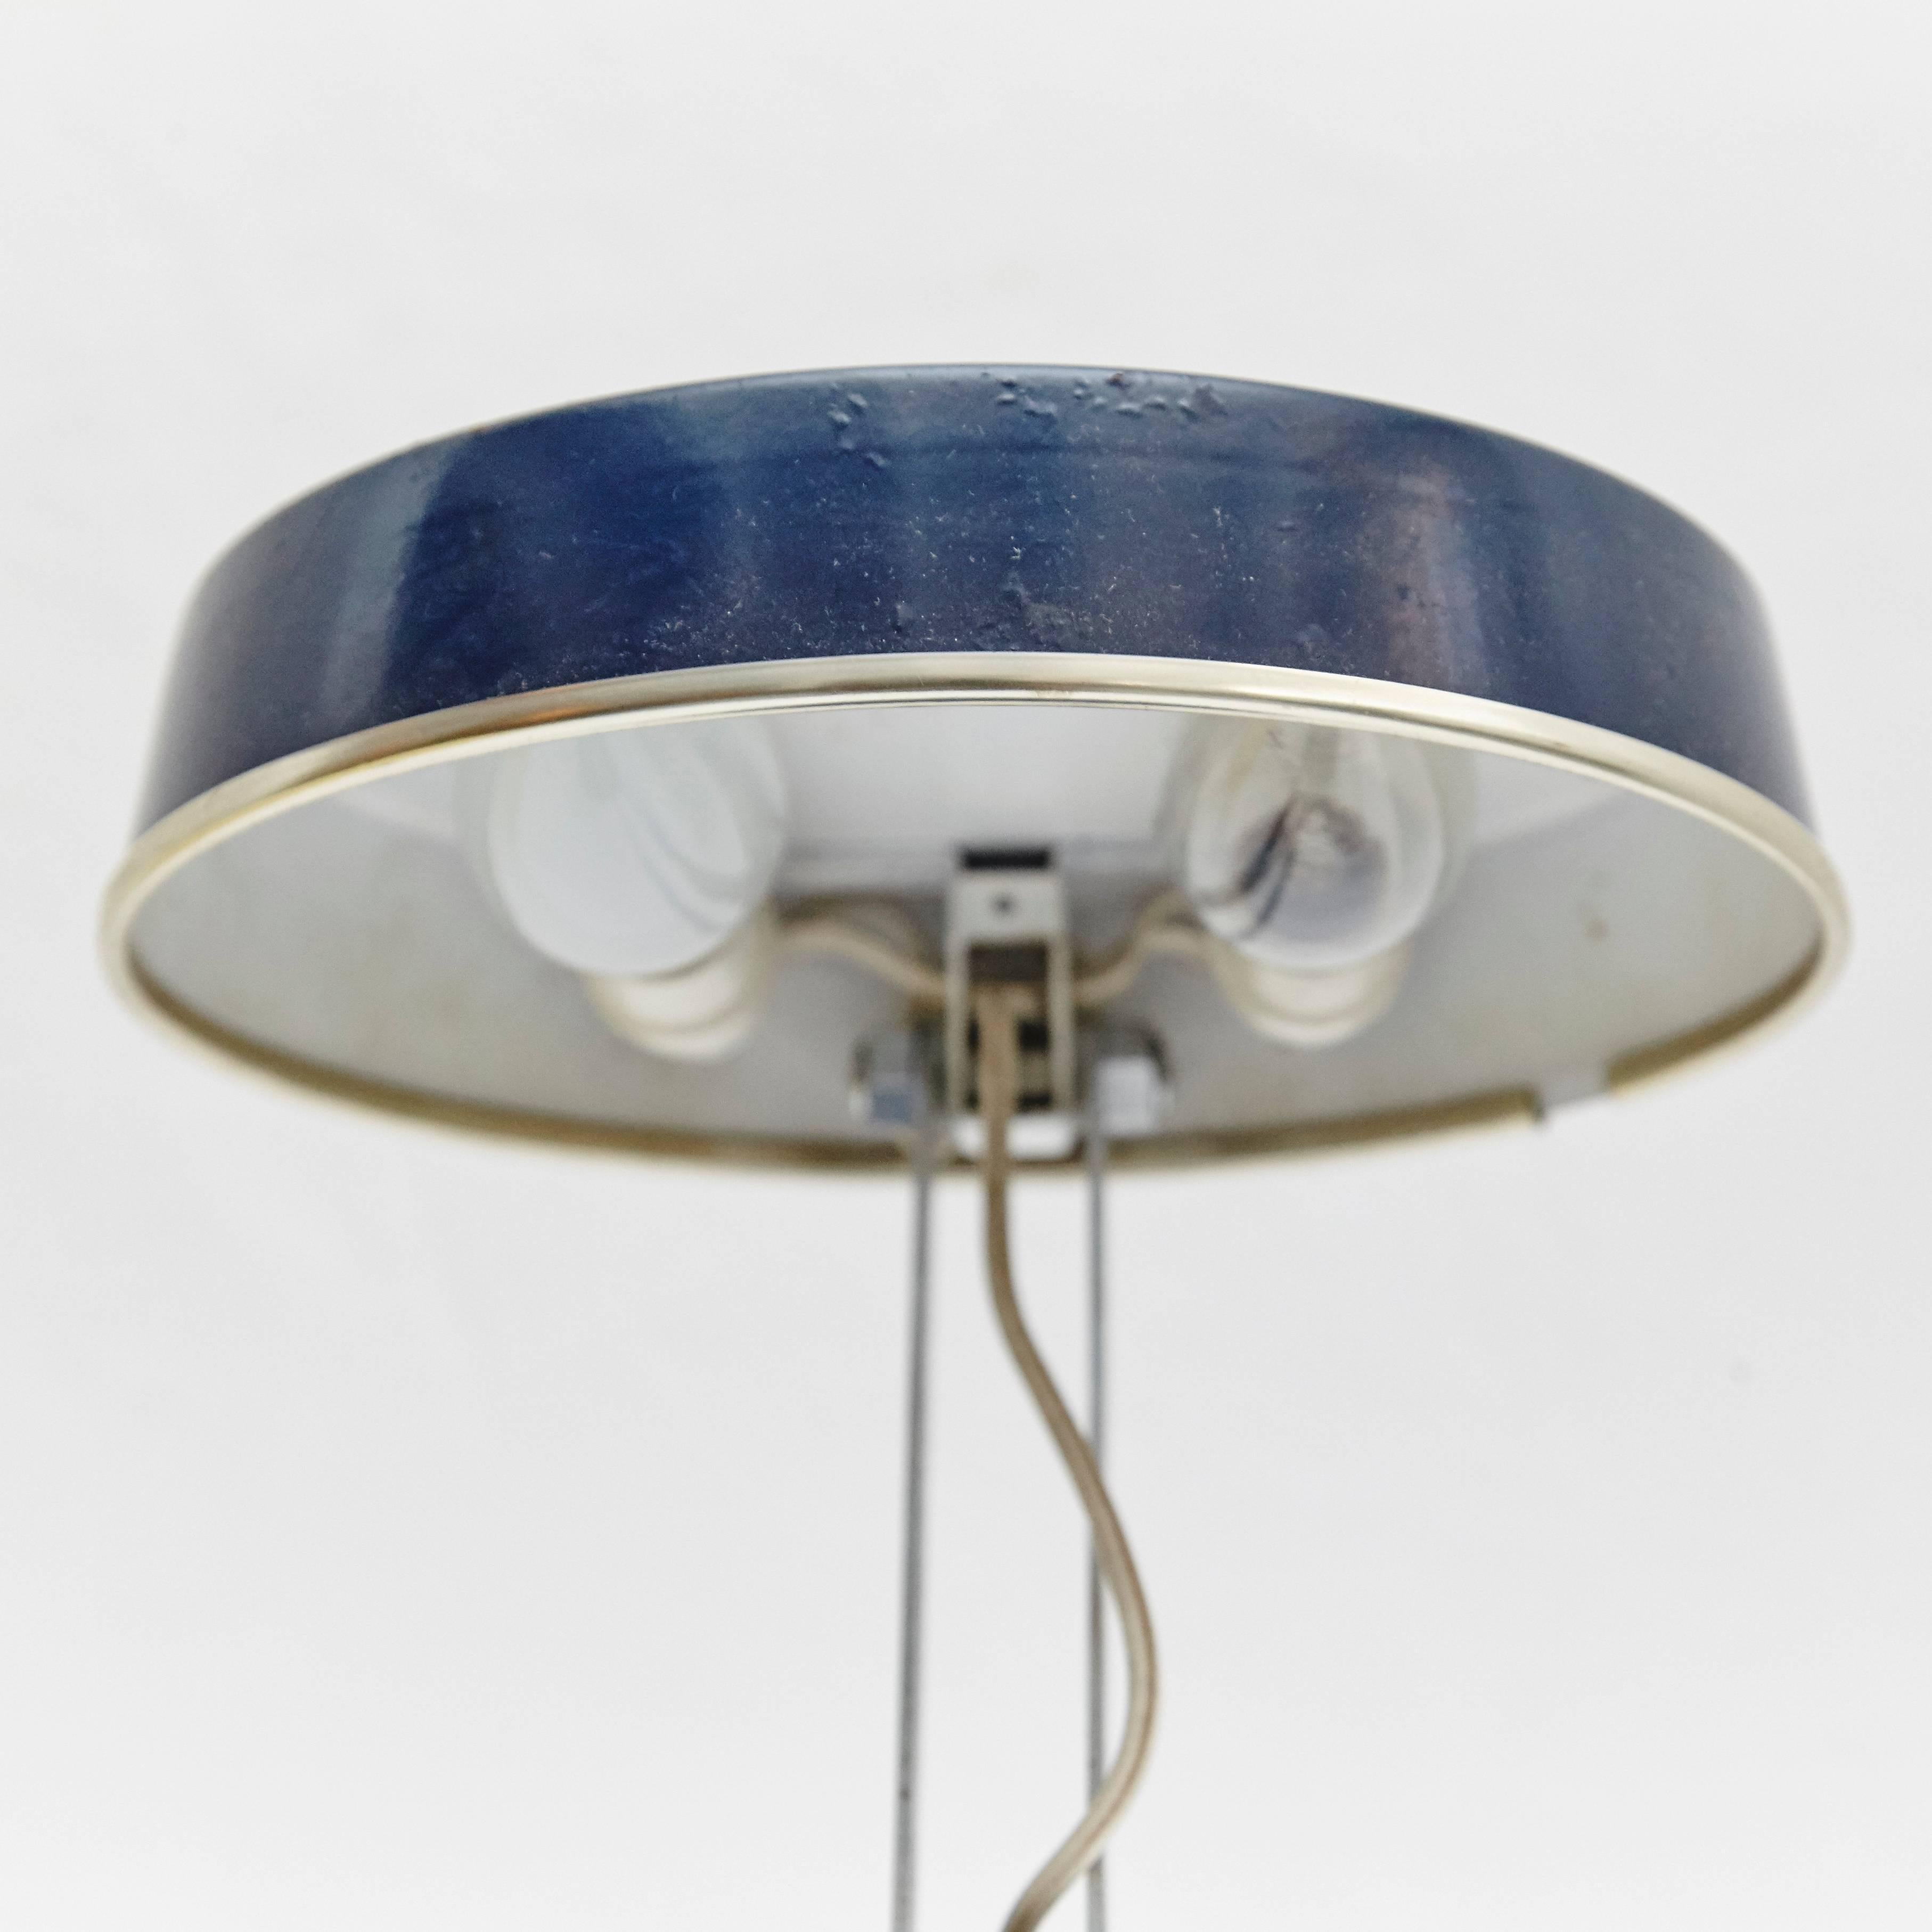 Spanish Industrial Lamp GEI, circa 1970